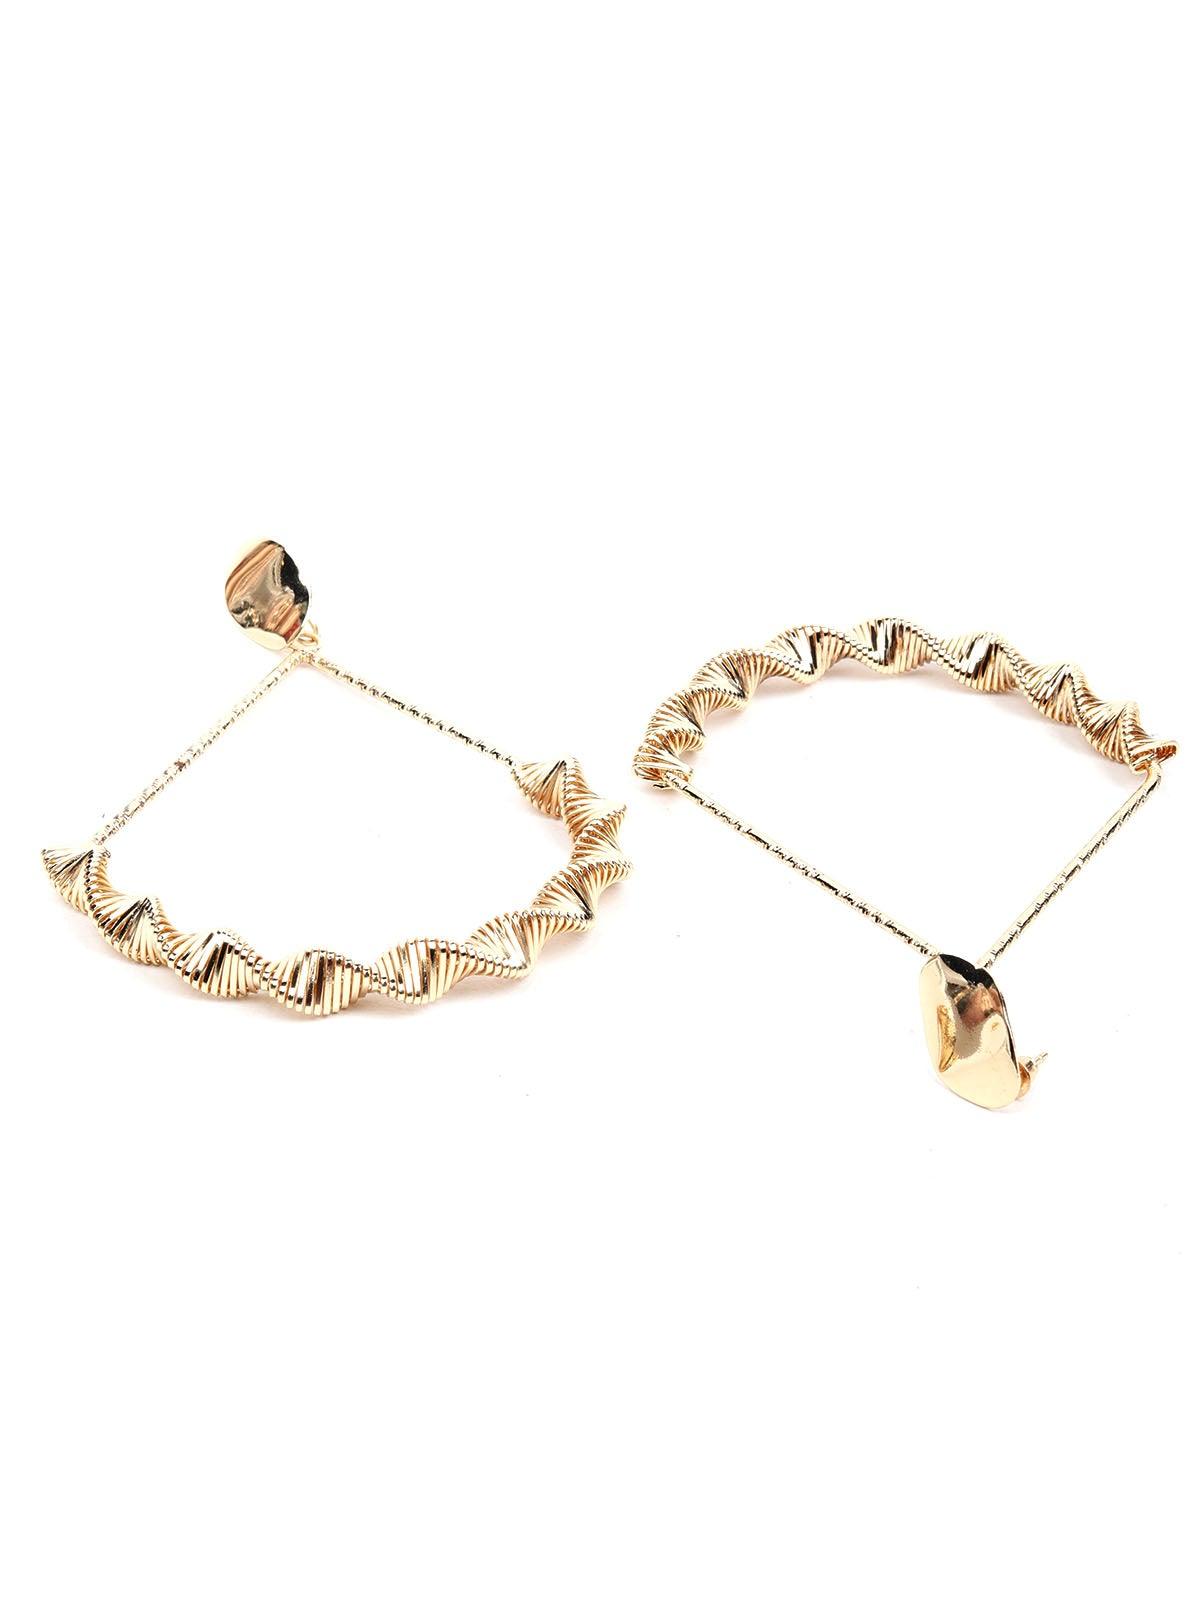 Stunning gold textured pendulum earrings - Odette